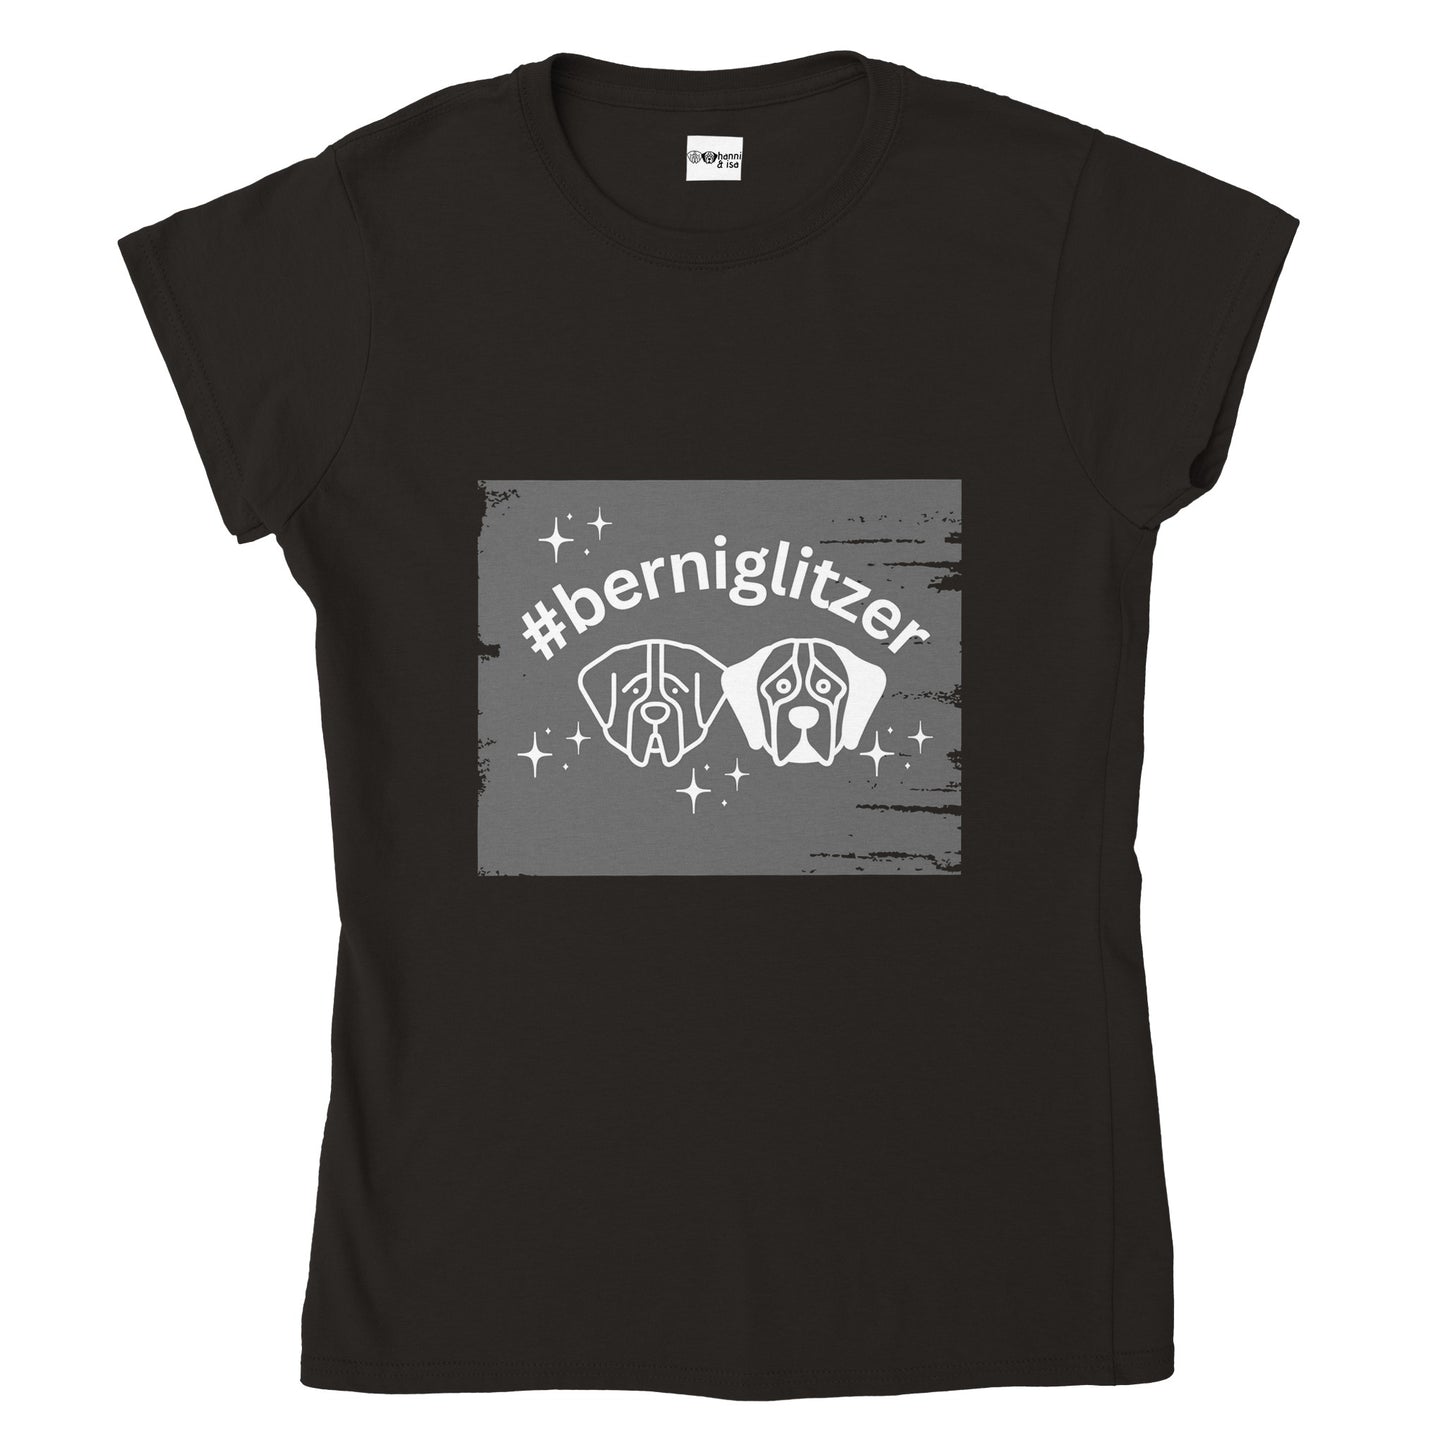 Berniglitzer hanni and isa women's t-shirt